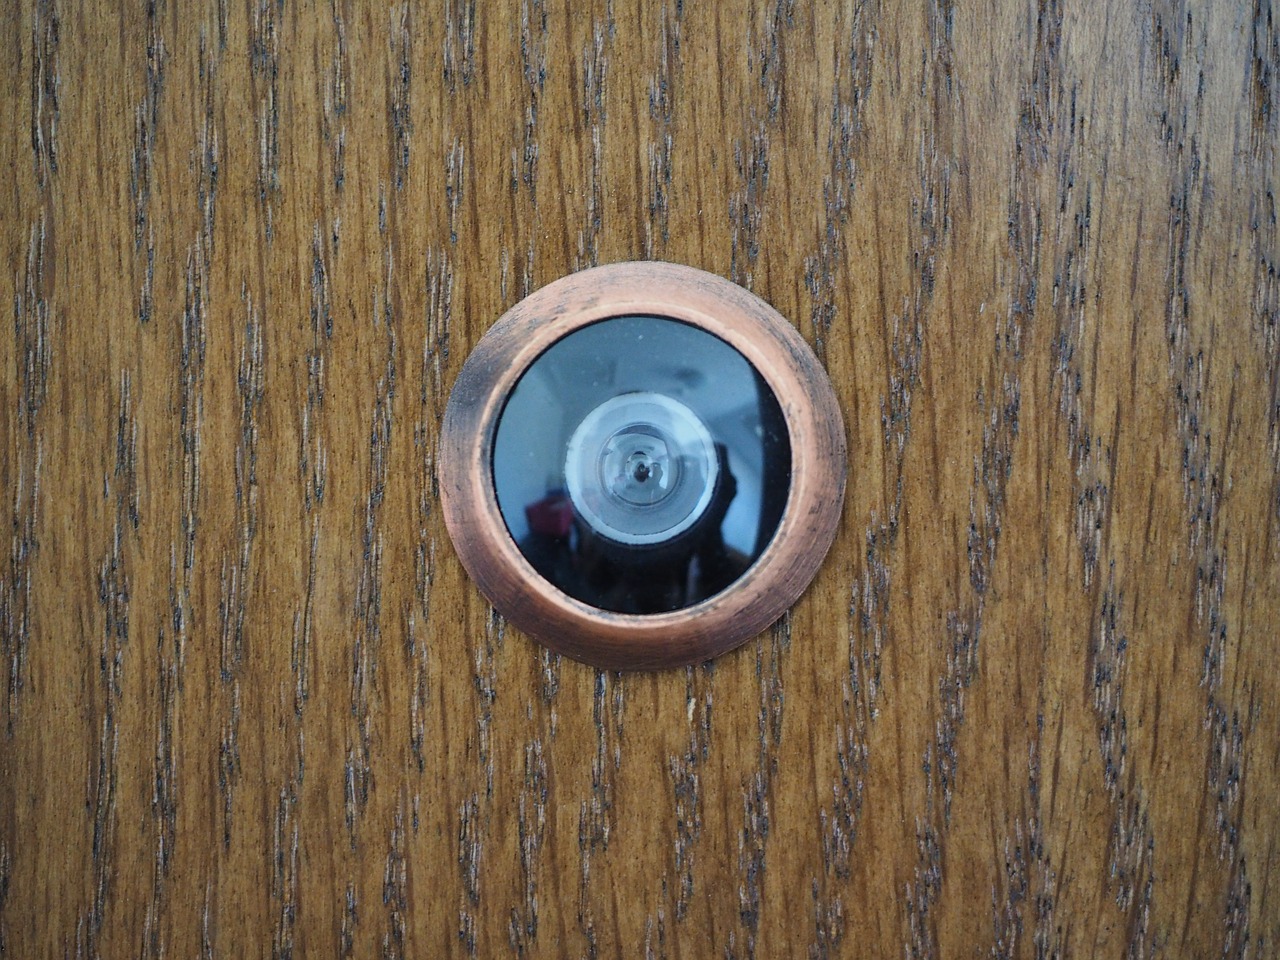 door with a mini spy camera